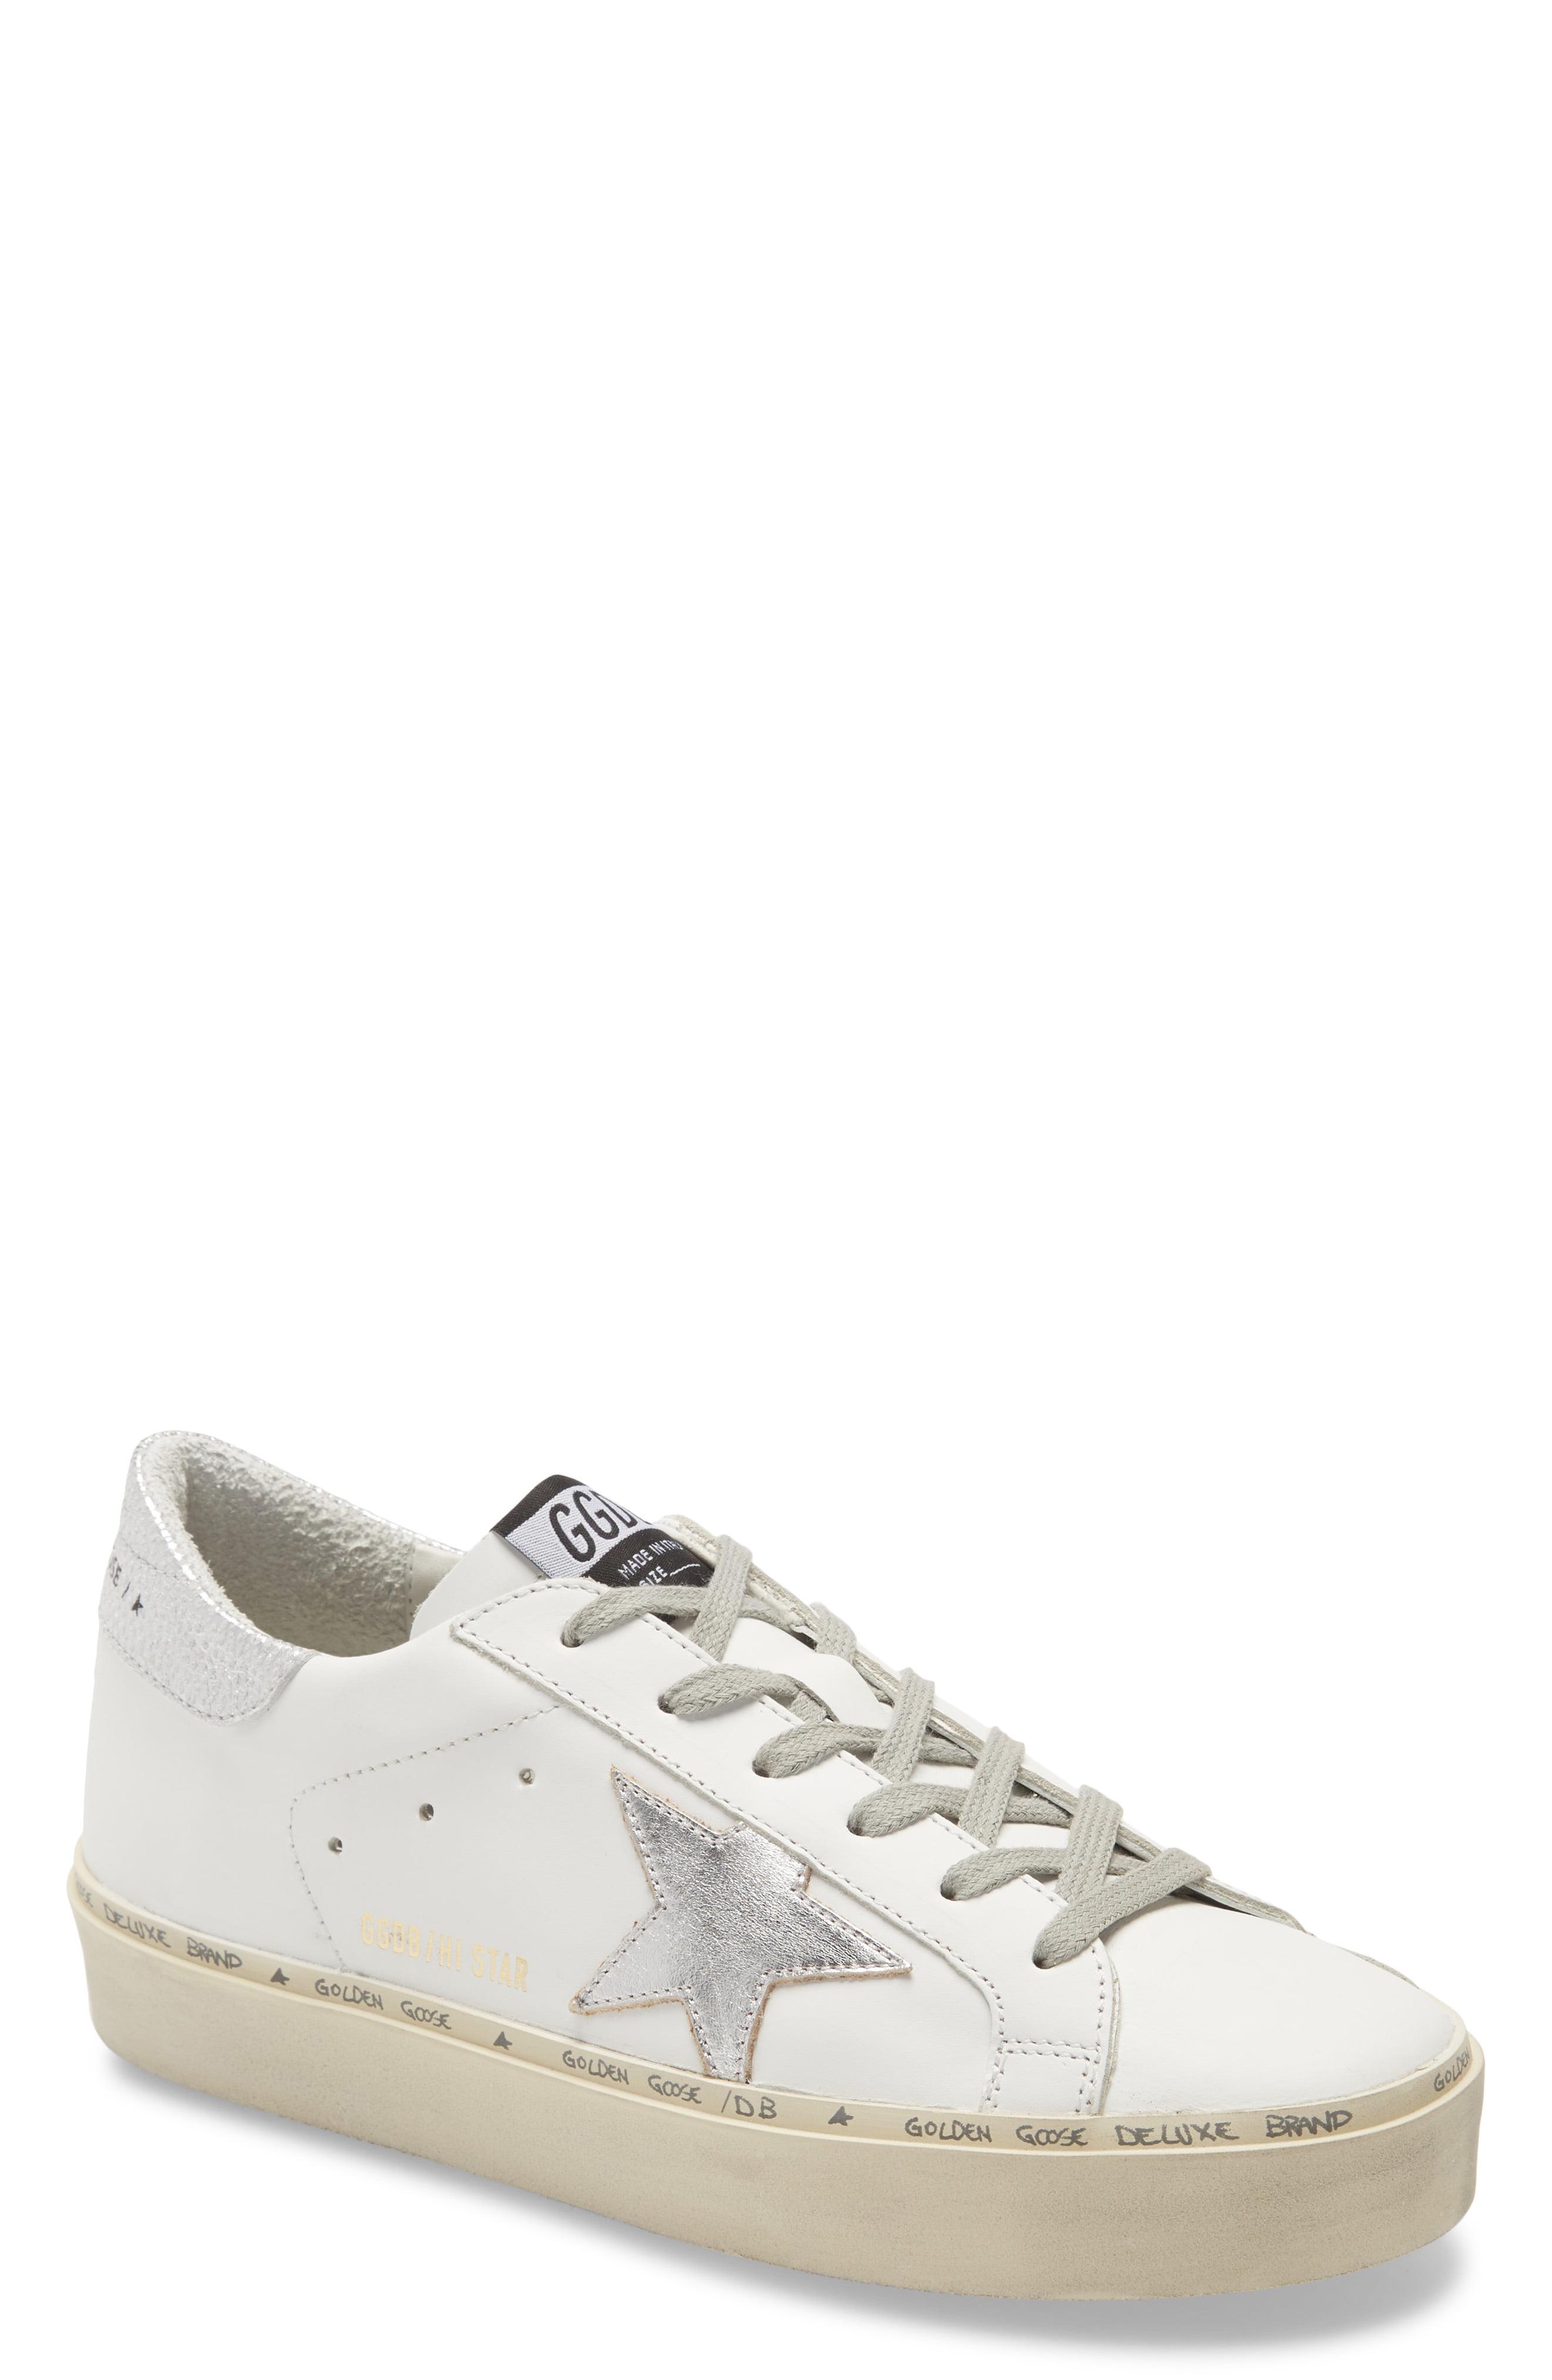 Golden Goose Deluxe Brand Hi Star Platform Sneaker in White Leather ...